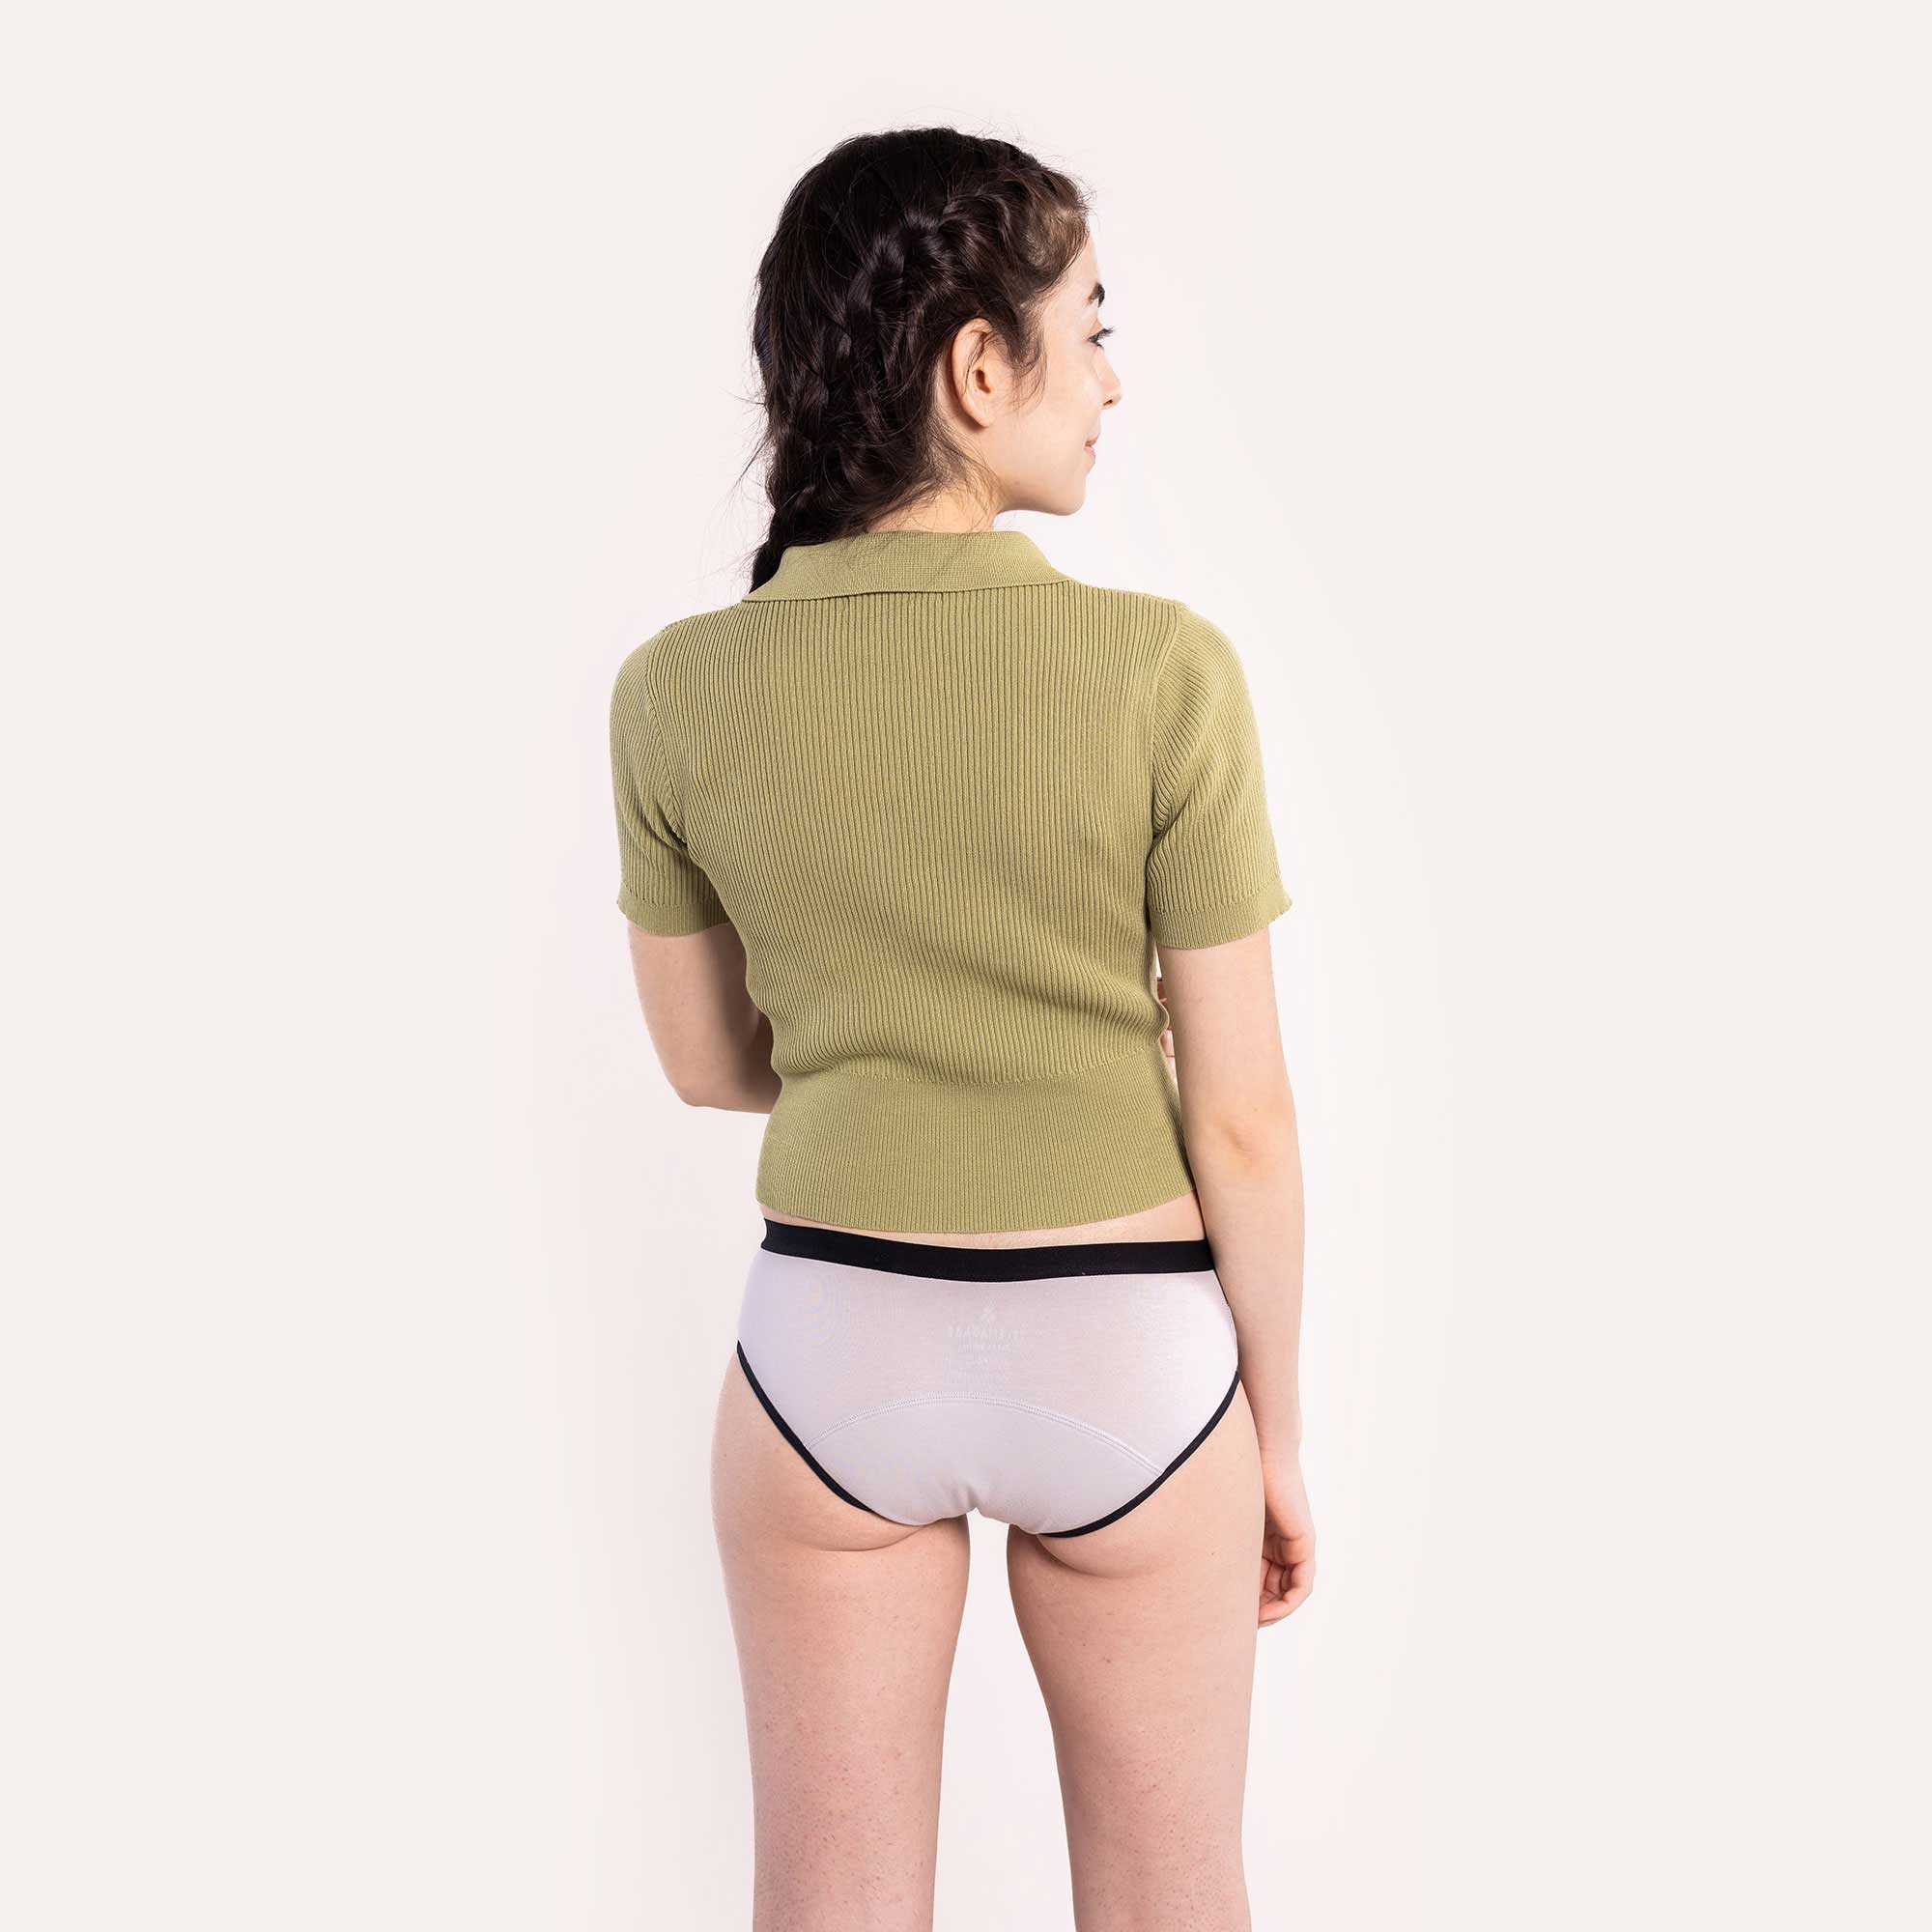 6-Pack-Teen Girls 100% Cotton Leak-Proof Period Panties-002 – SYNPOS